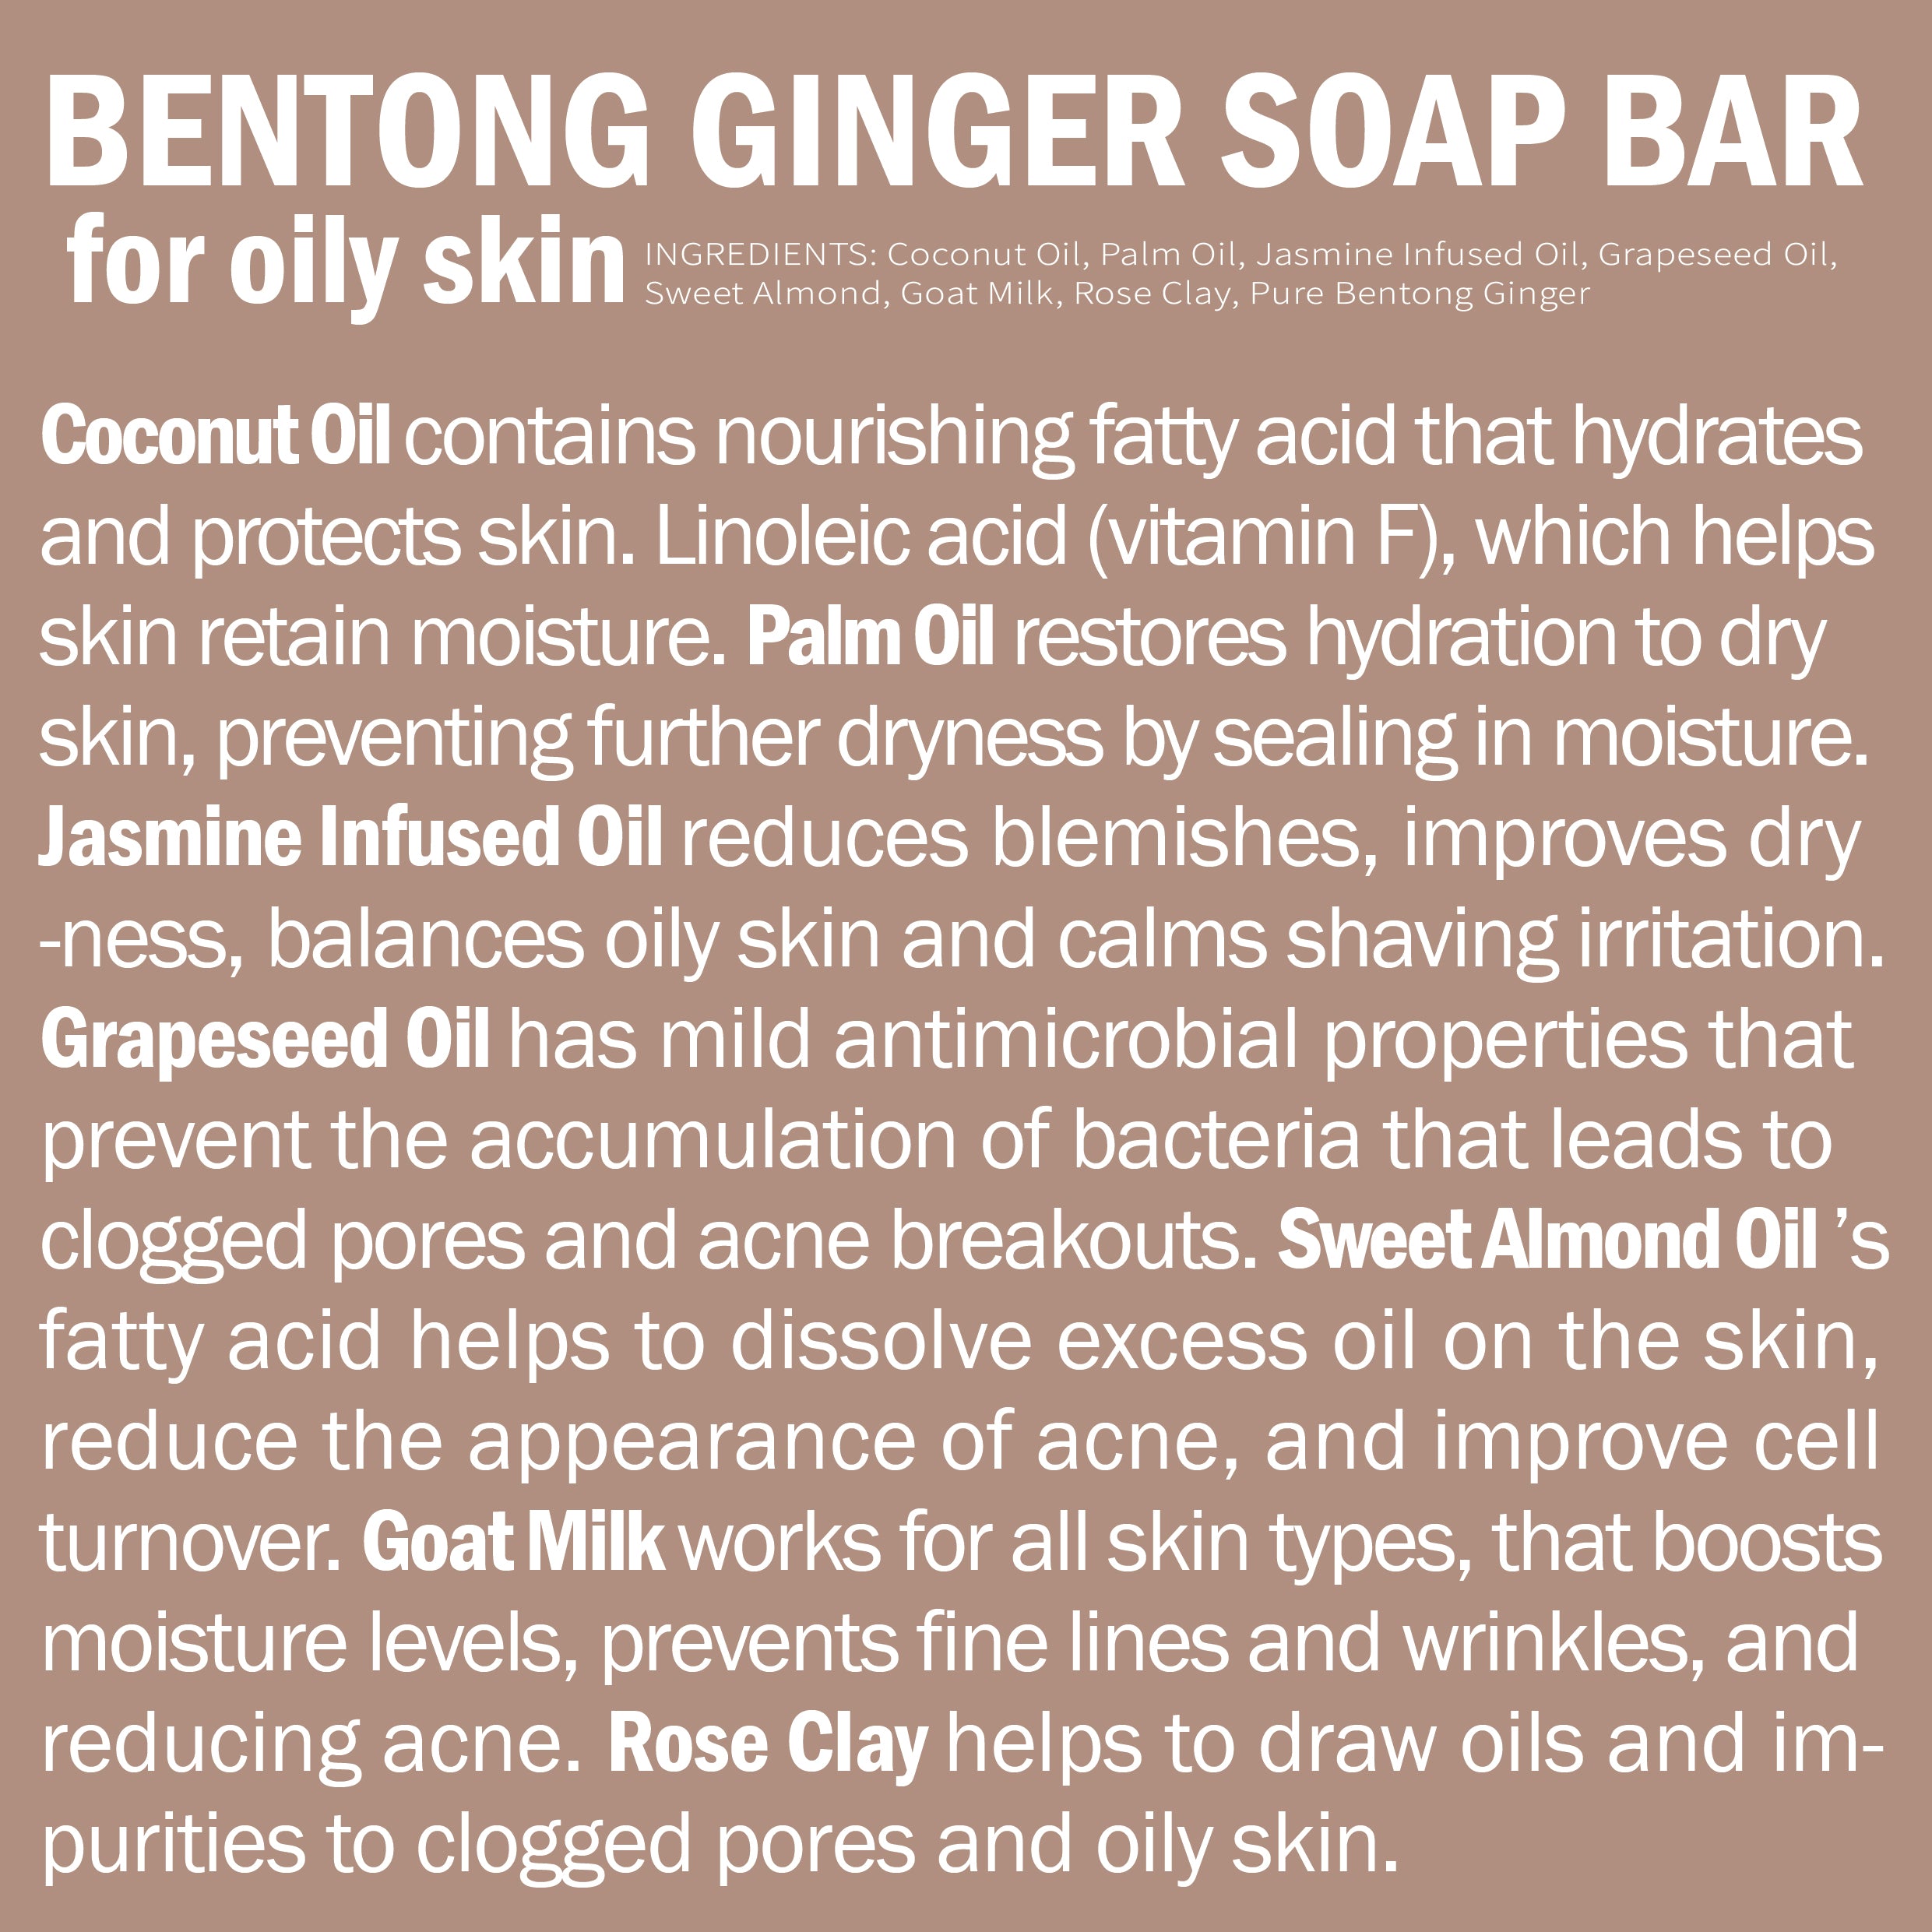 Bentong Ginger Soap Bar (Oily Skin)